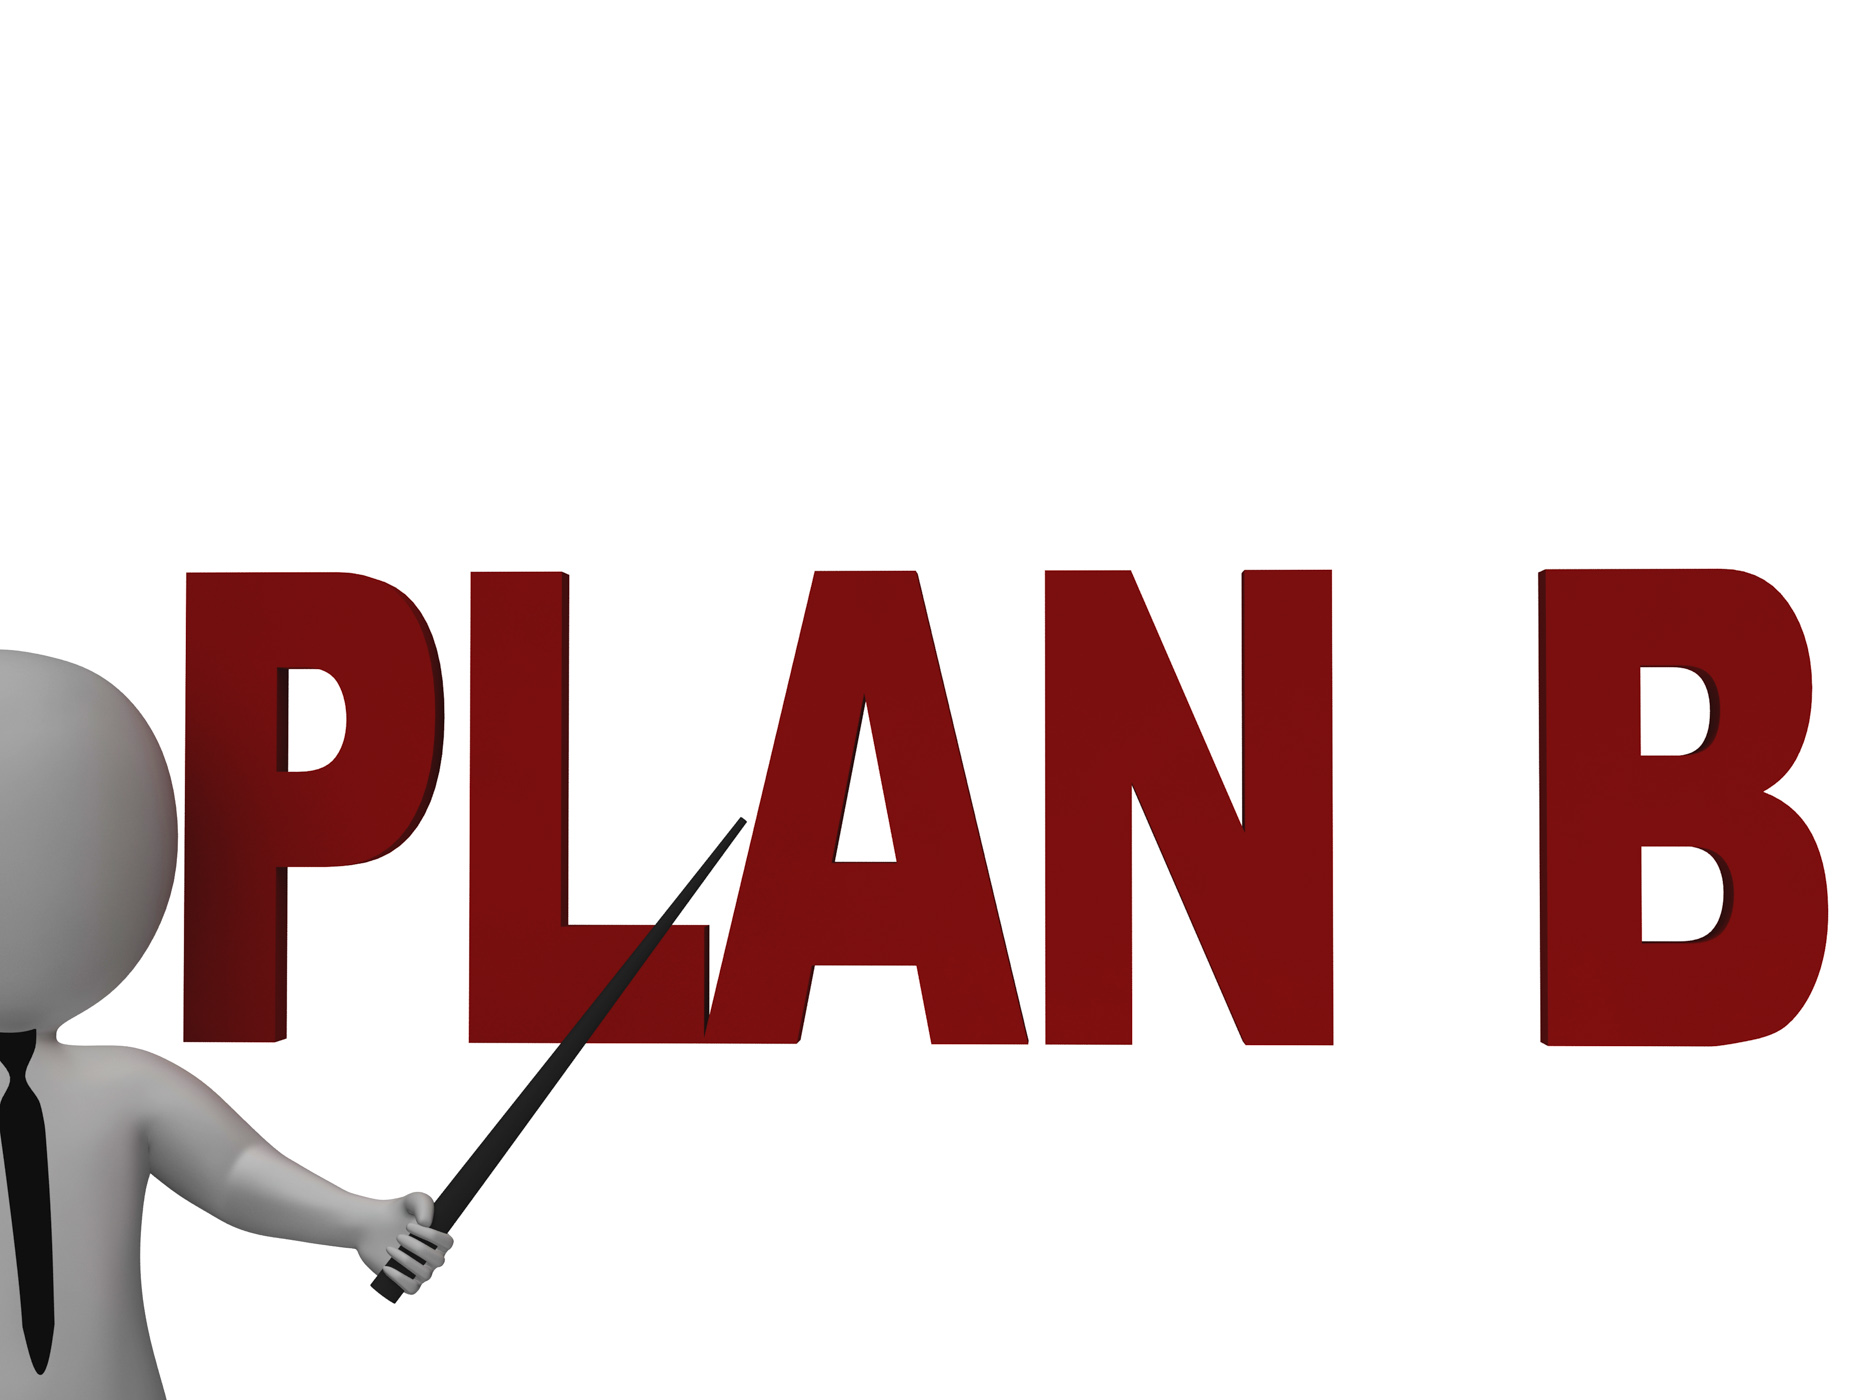 Plan b showing alternative strategy photo